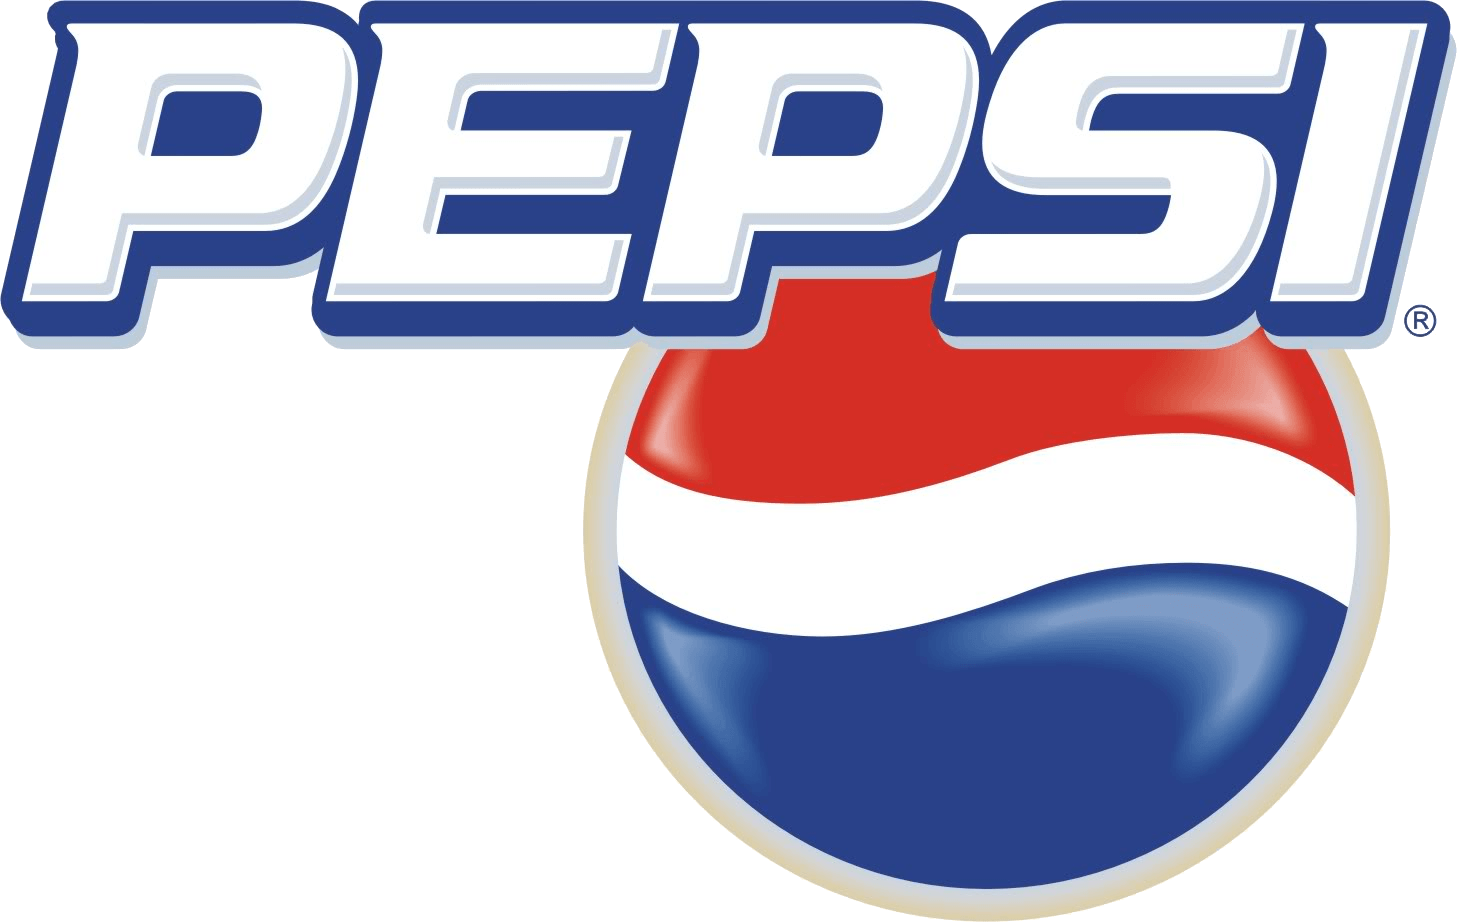 PepsiCo Global Logo - Pepsi | Logopedia | FANDOM powered by Wikia